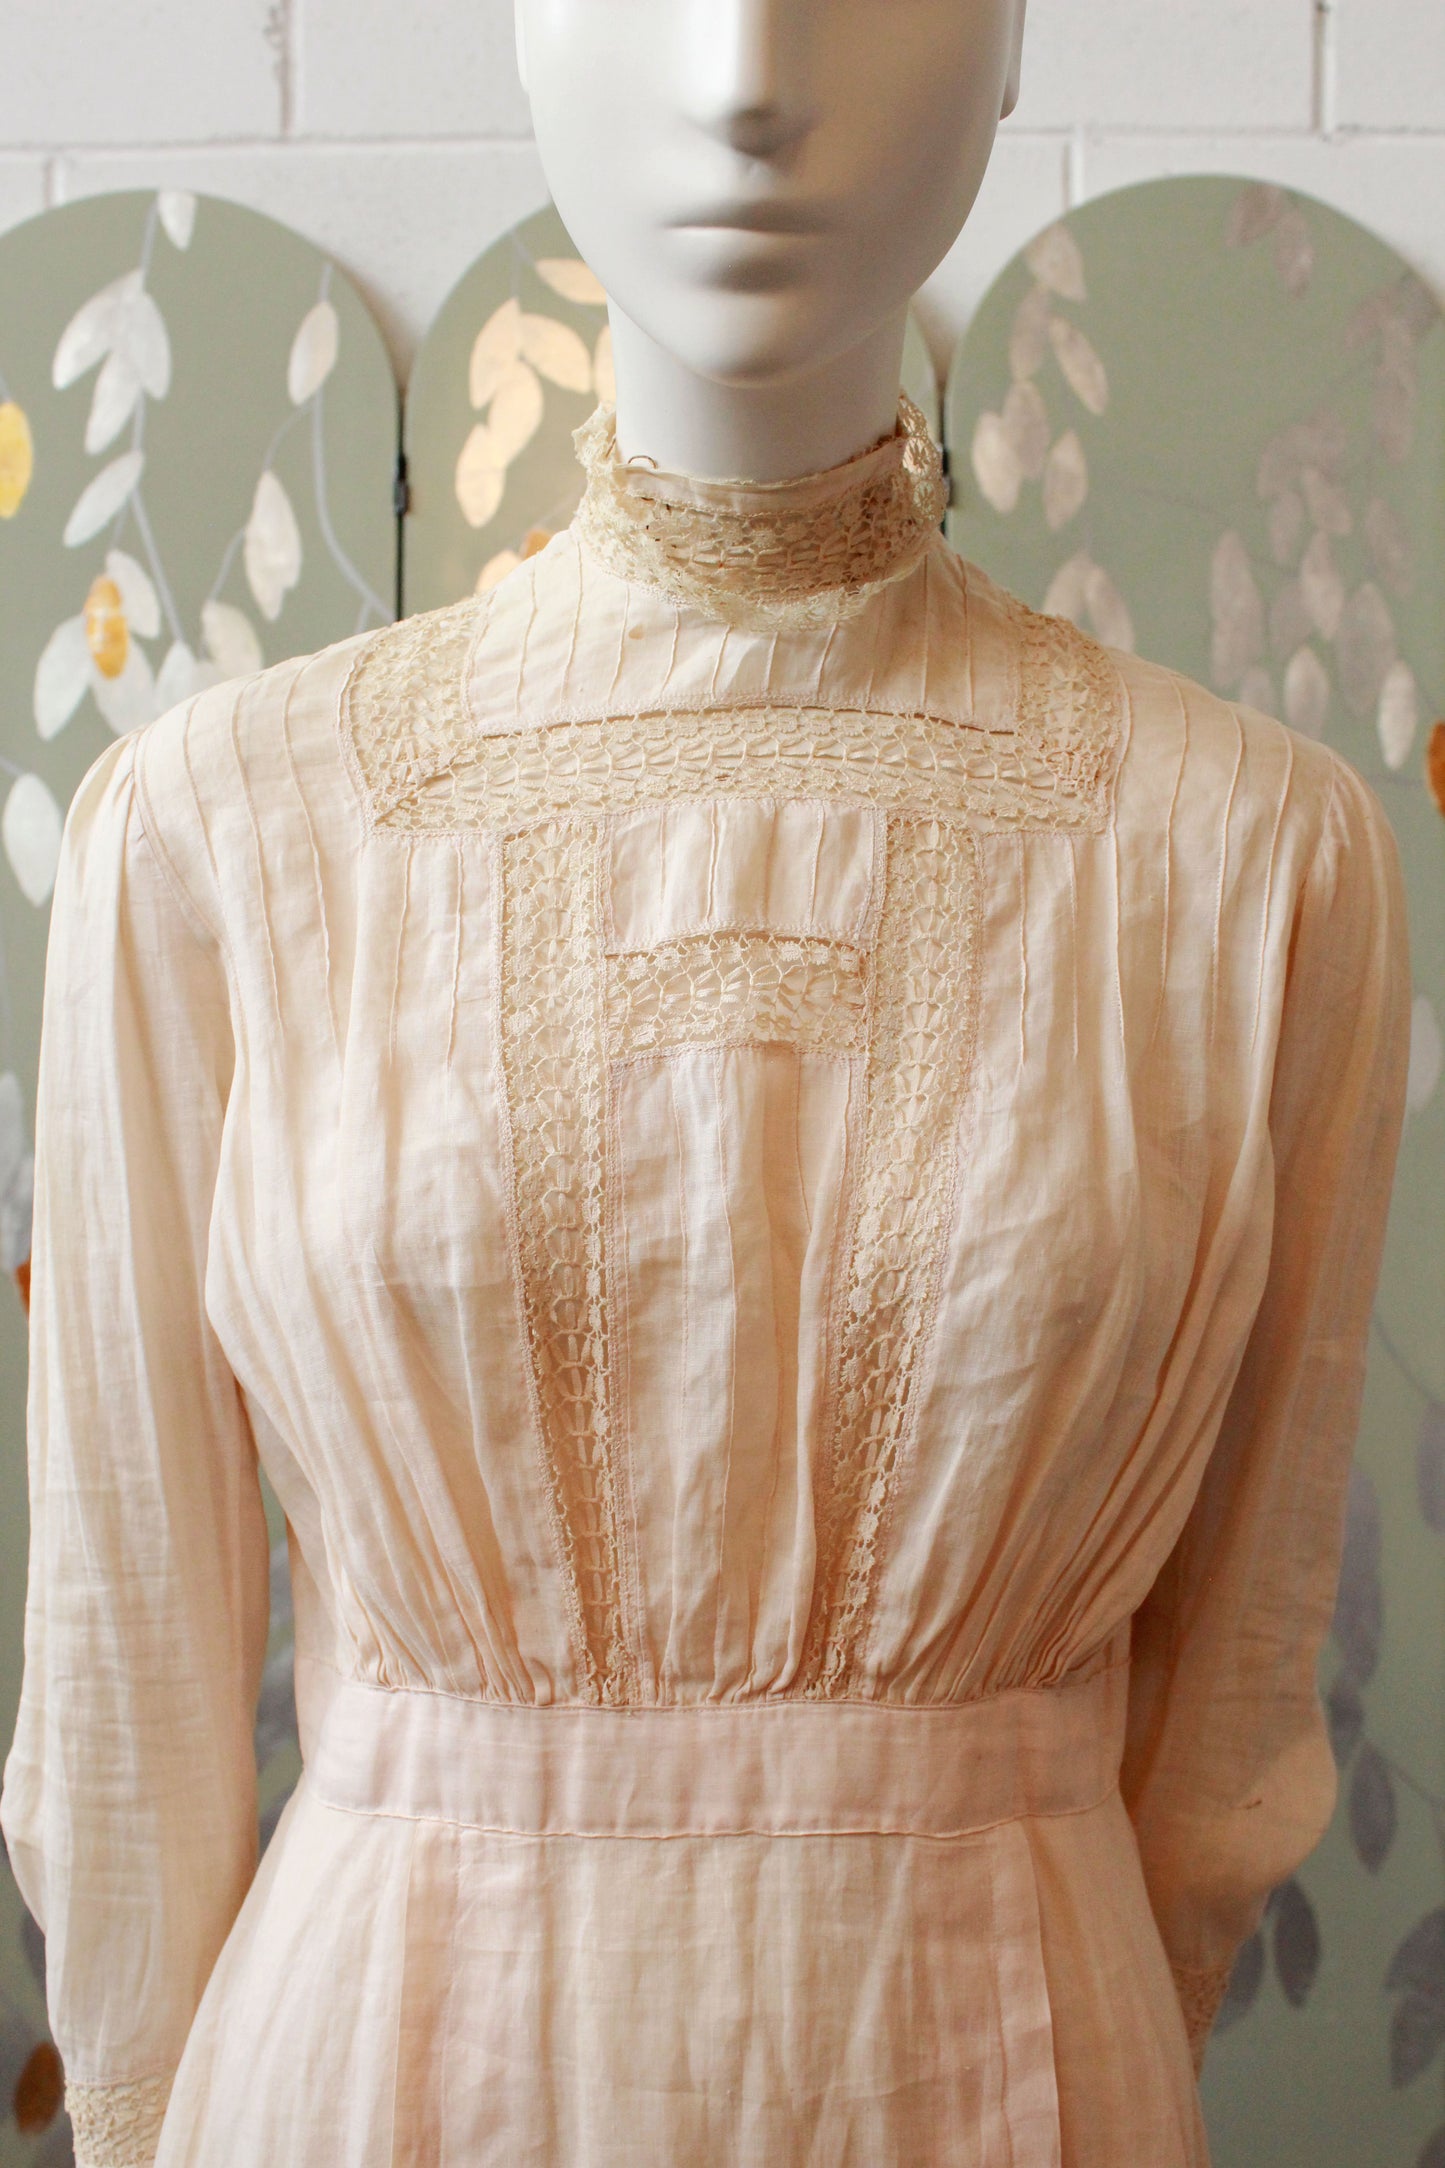 Antique Edwardian Day Dress, Soft blush, Summer Dress, Cotton Vintage Dress, Boho Wedding Dress, Lace and Embroidery Small-XS